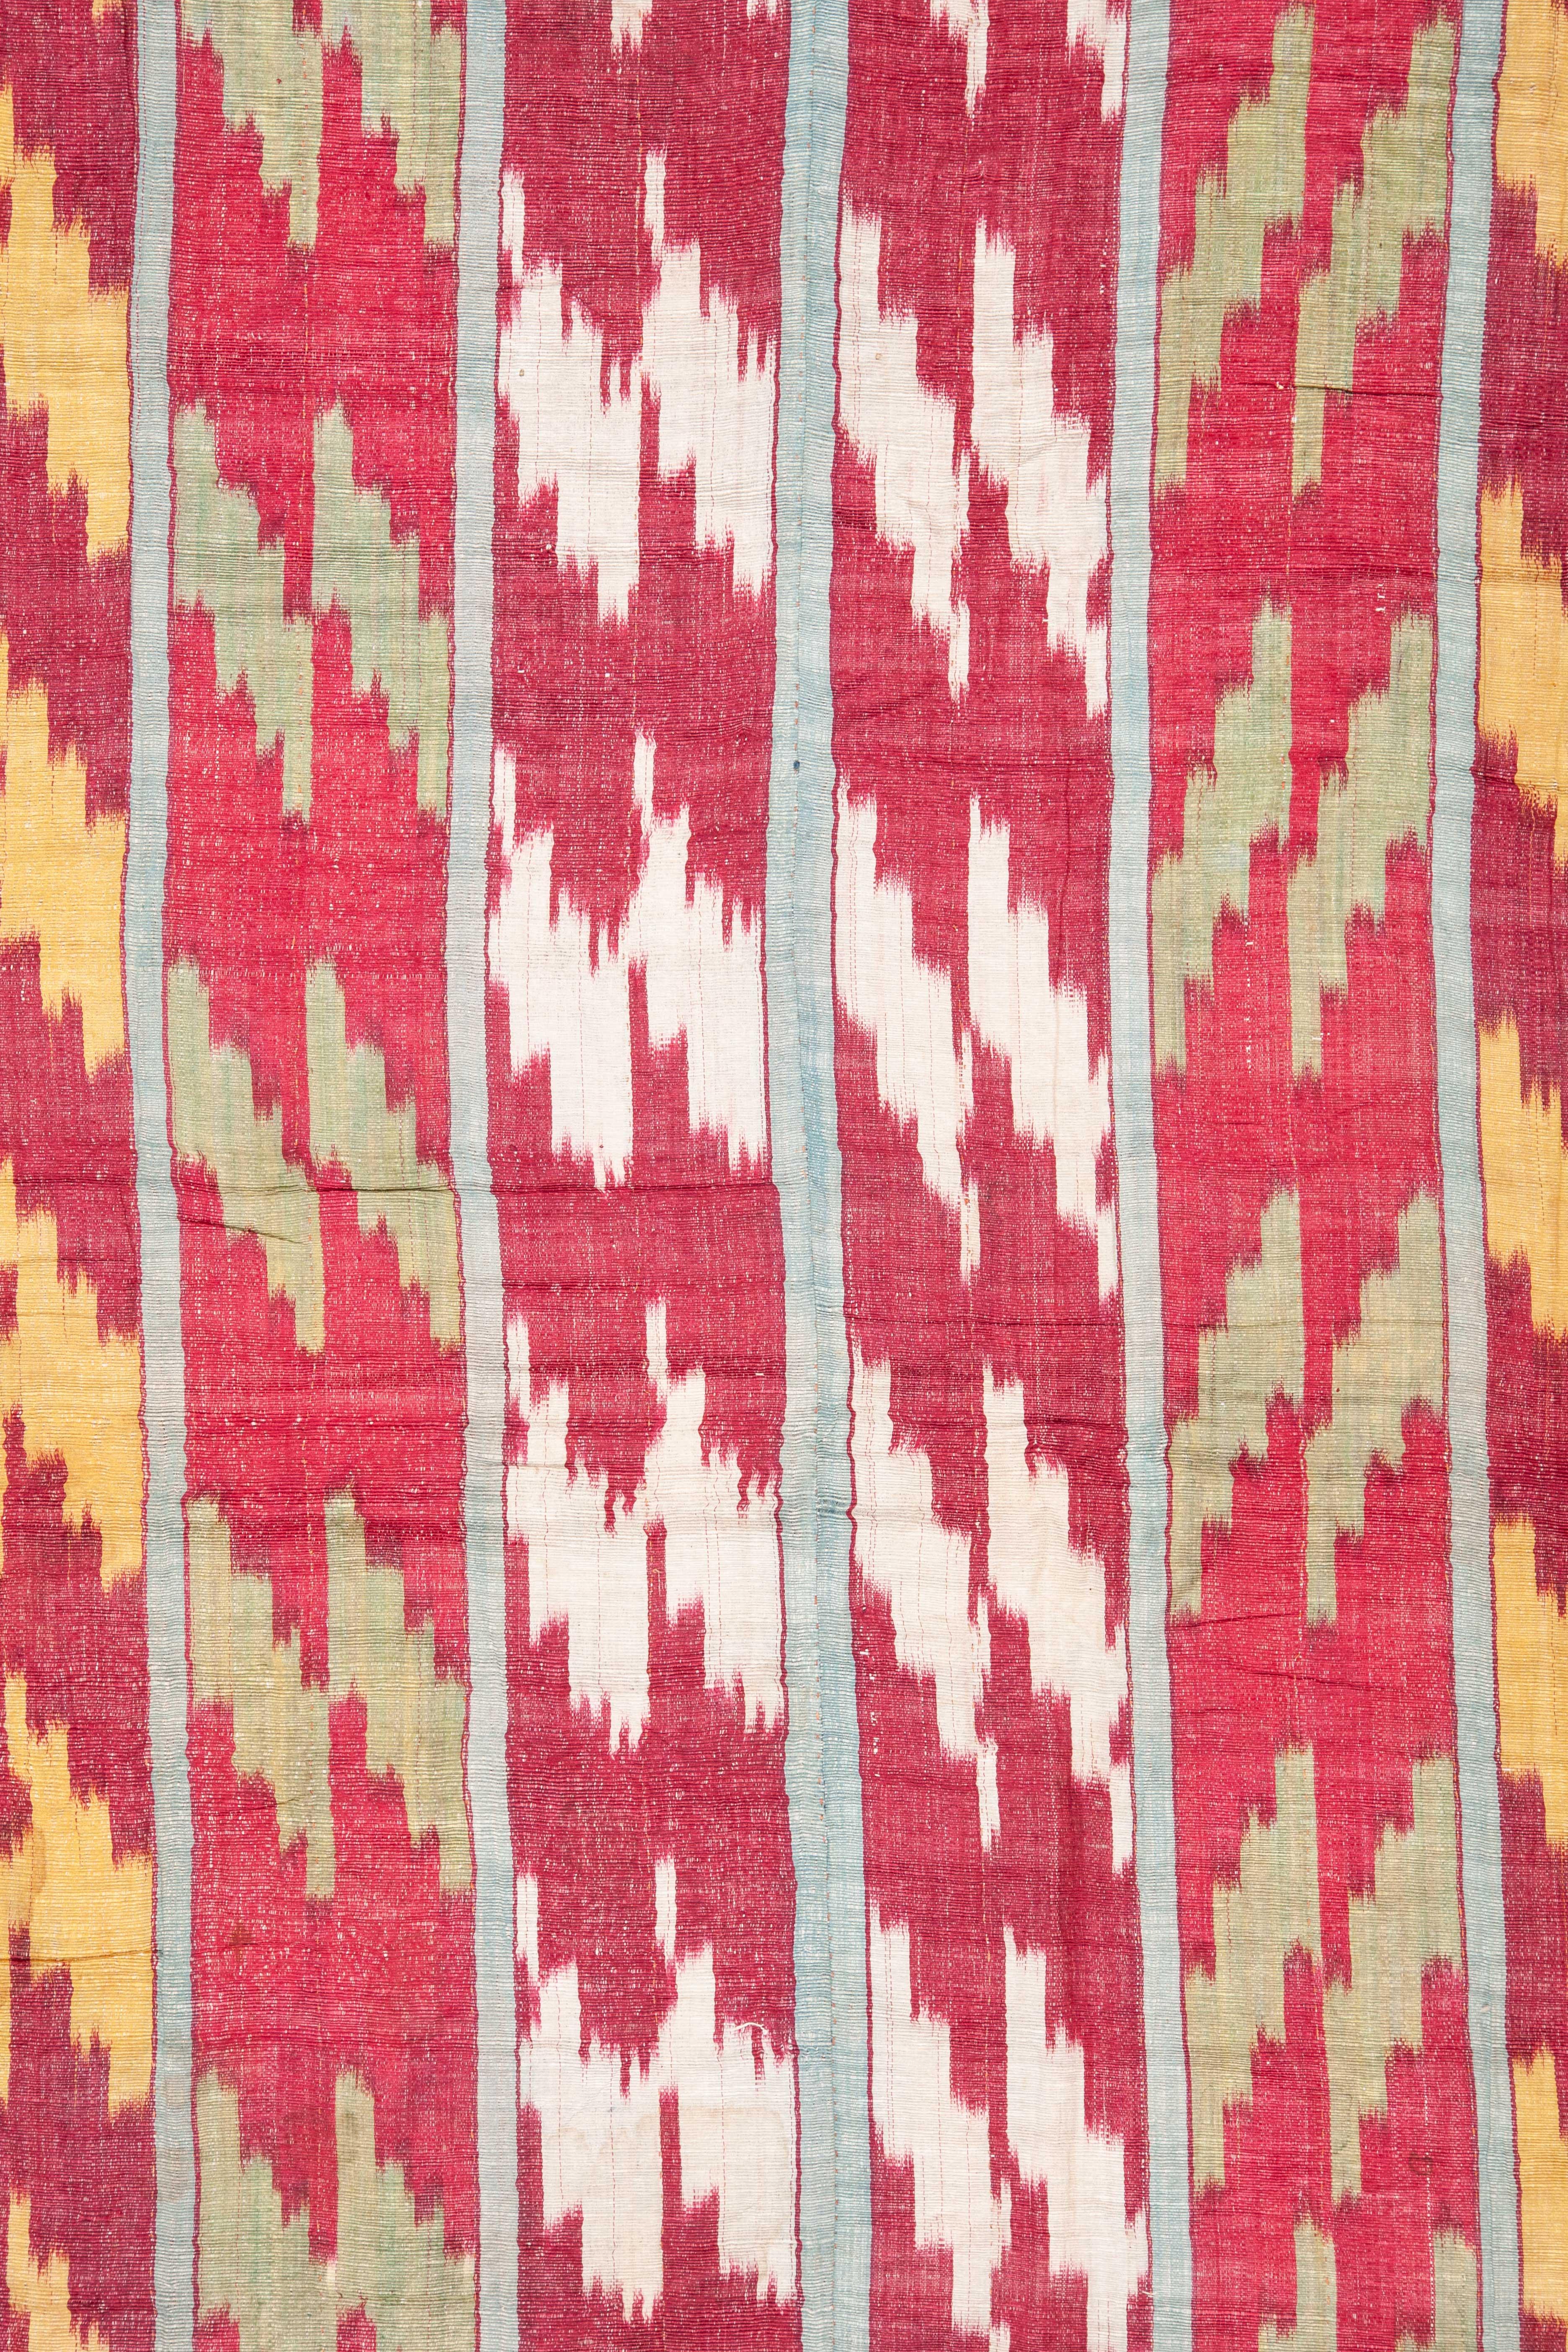 Tribal Antique Uzbek Silk Warp Cotton Wefr Ikat Panel, 19th Century